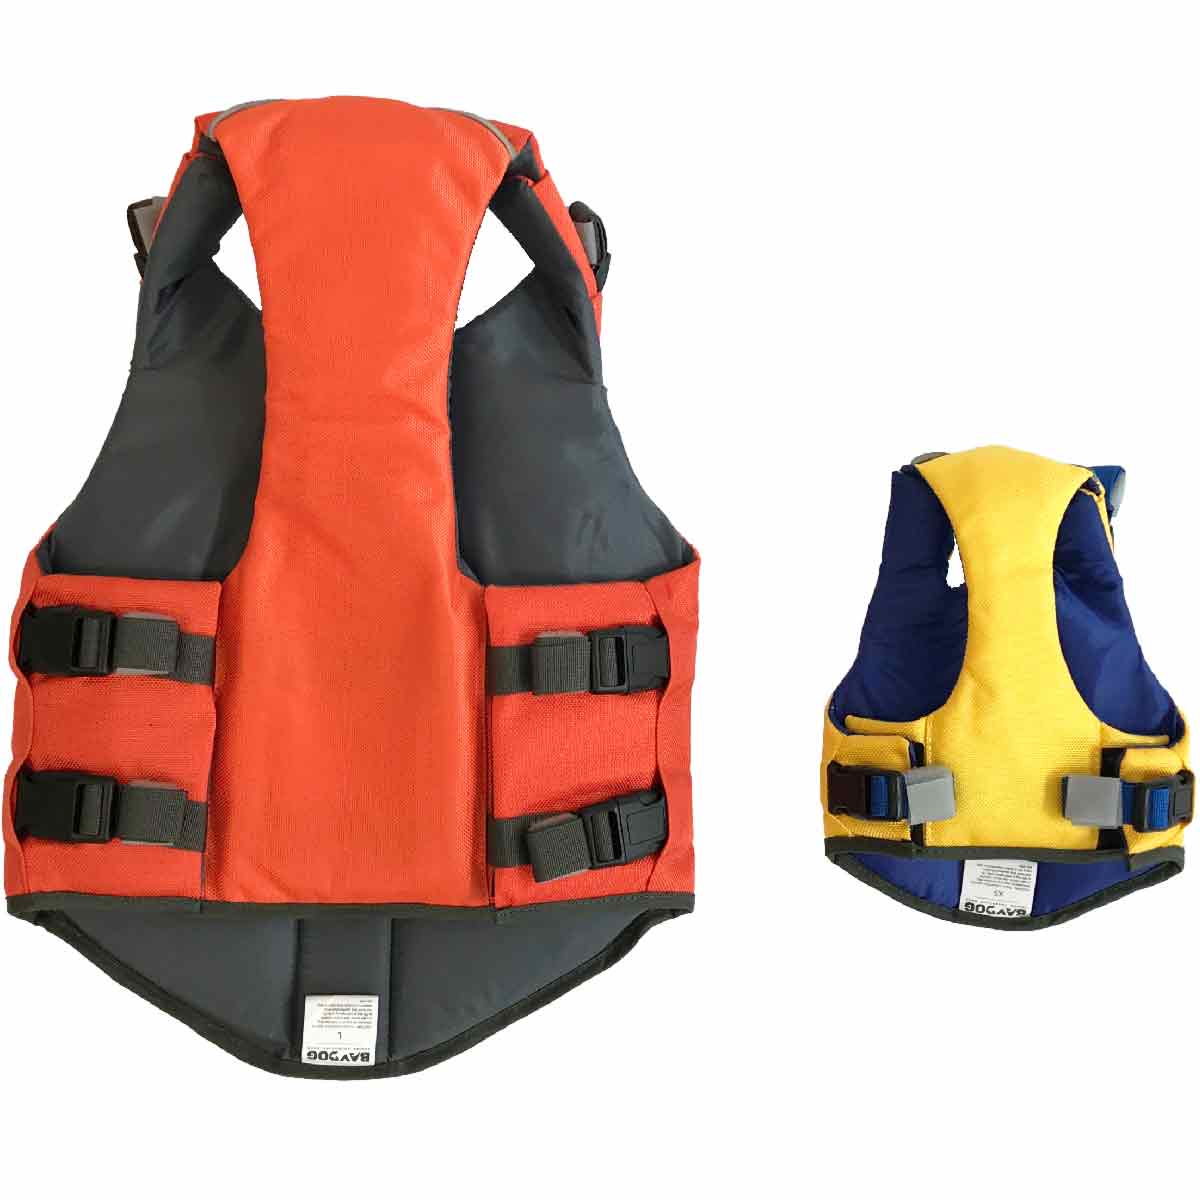 Baydog Monterey Bay life jacket floation vest for dogs back view of both colors.